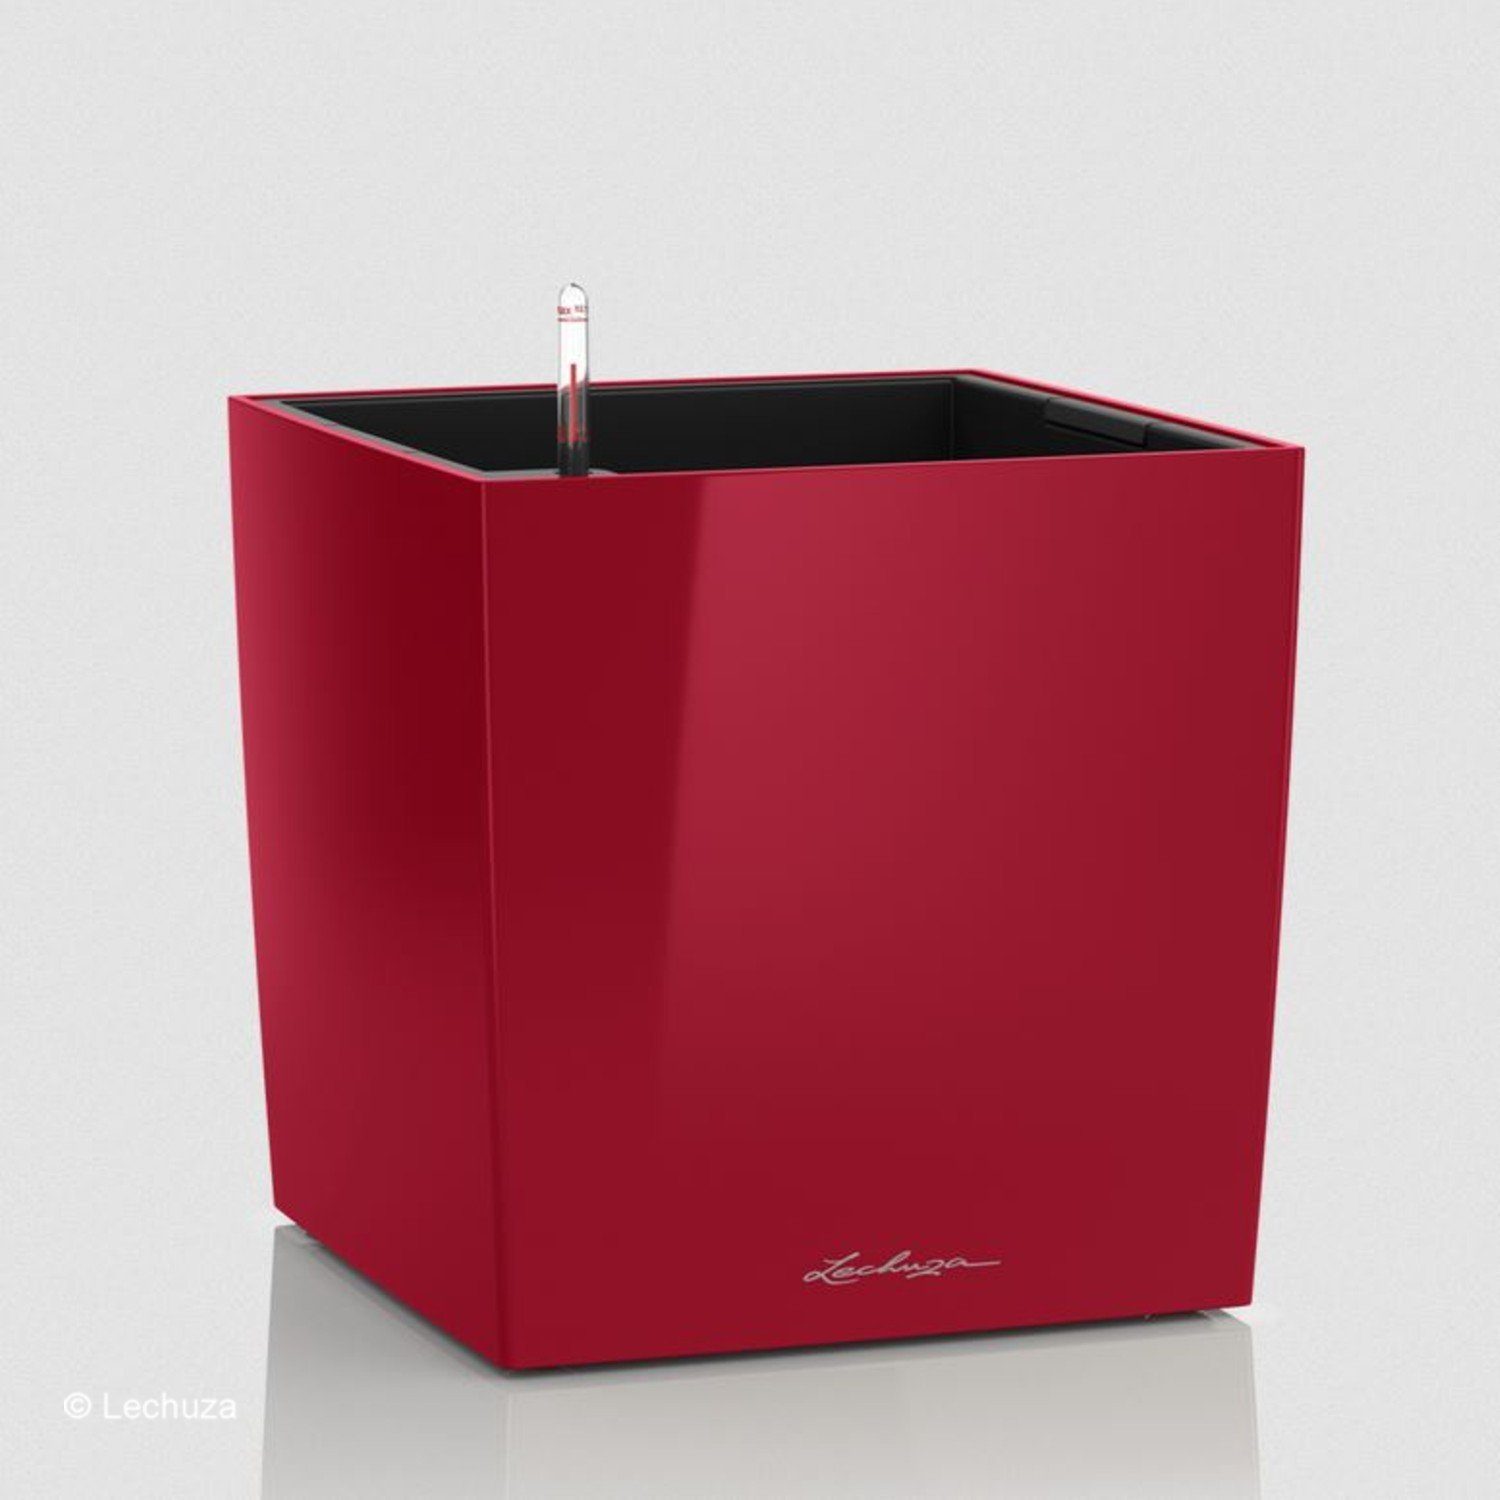 Lechuza® Pflanzkübel Lechuza Pflanztrog Cube 40 scarlet rot hochglanz 1